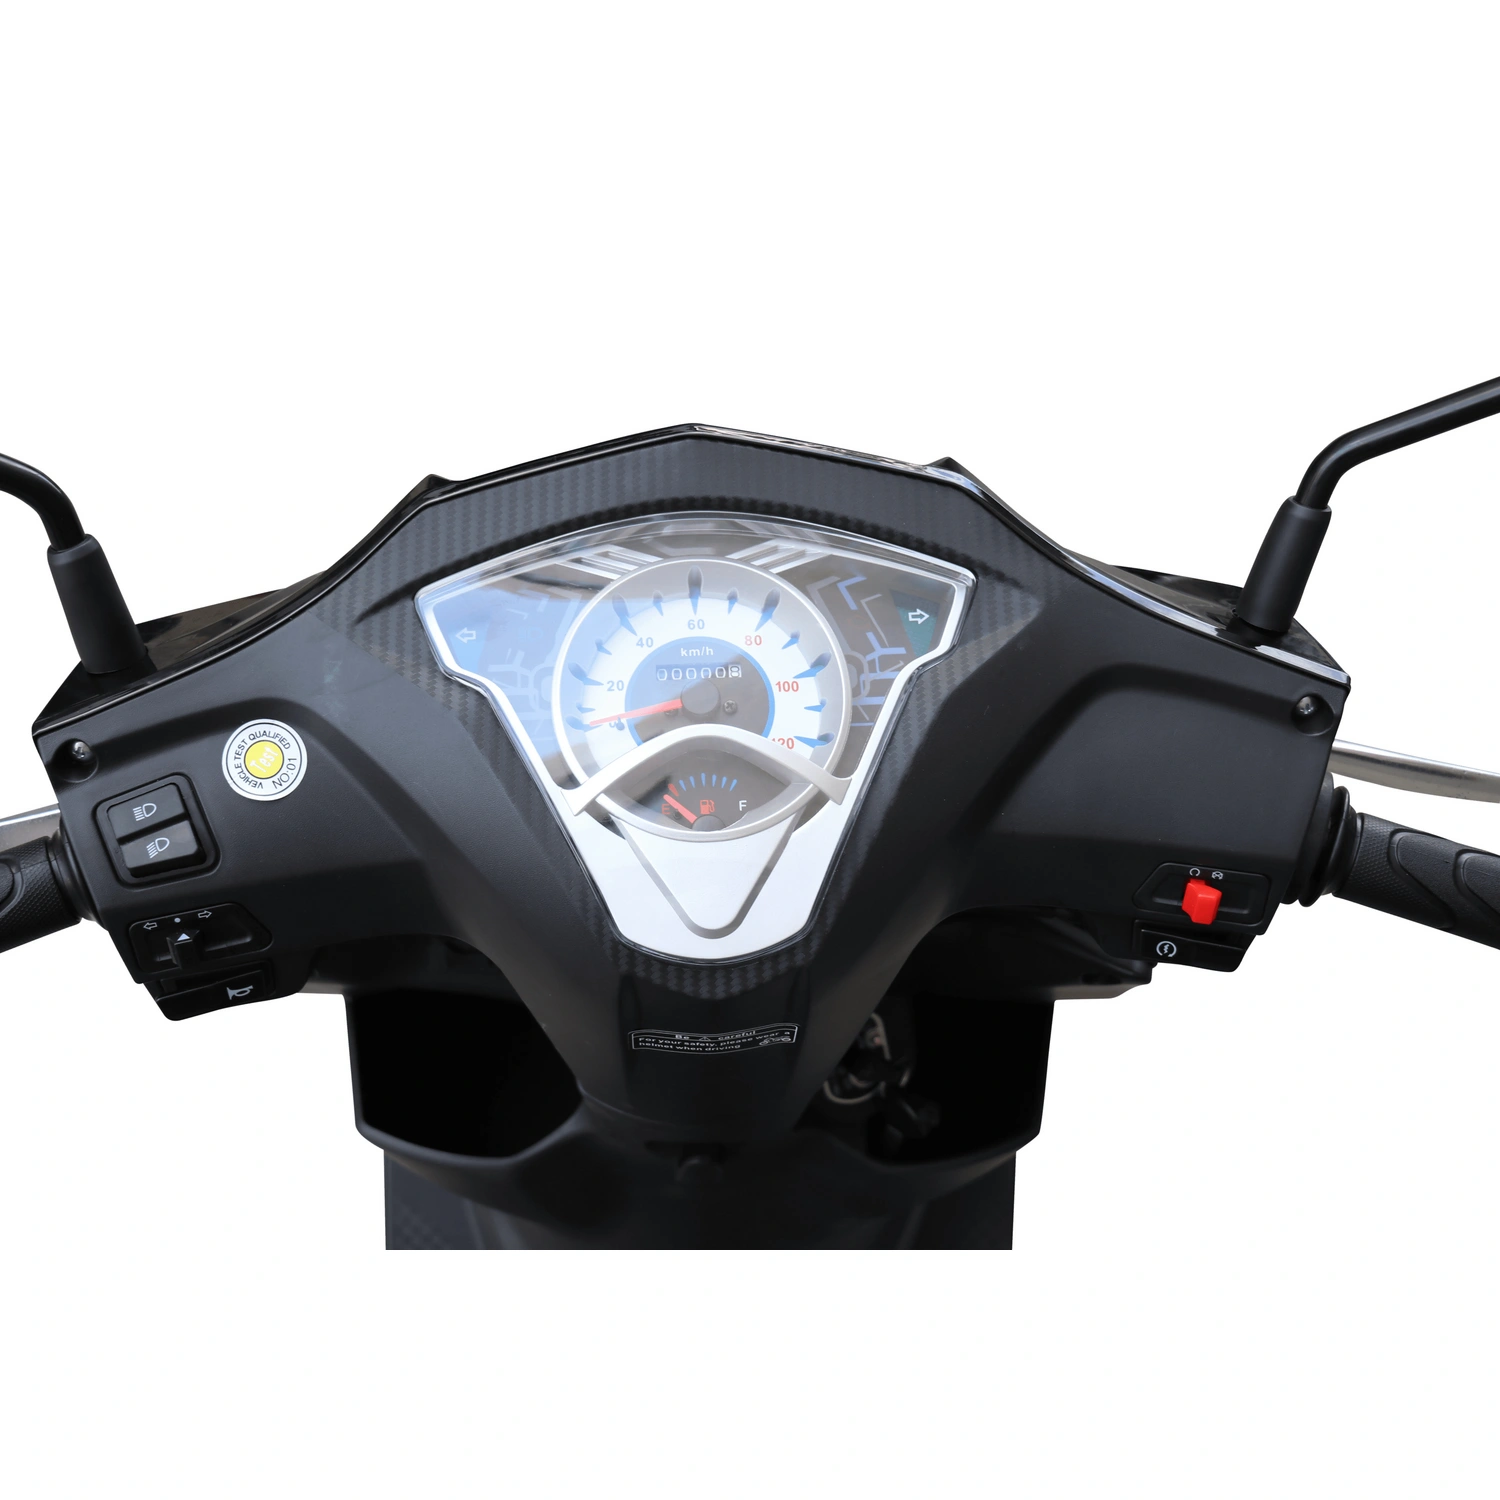 ALPHA MOTORS Motorroller »Topdrive «, 85 km/h, Euro 125 5 cm³